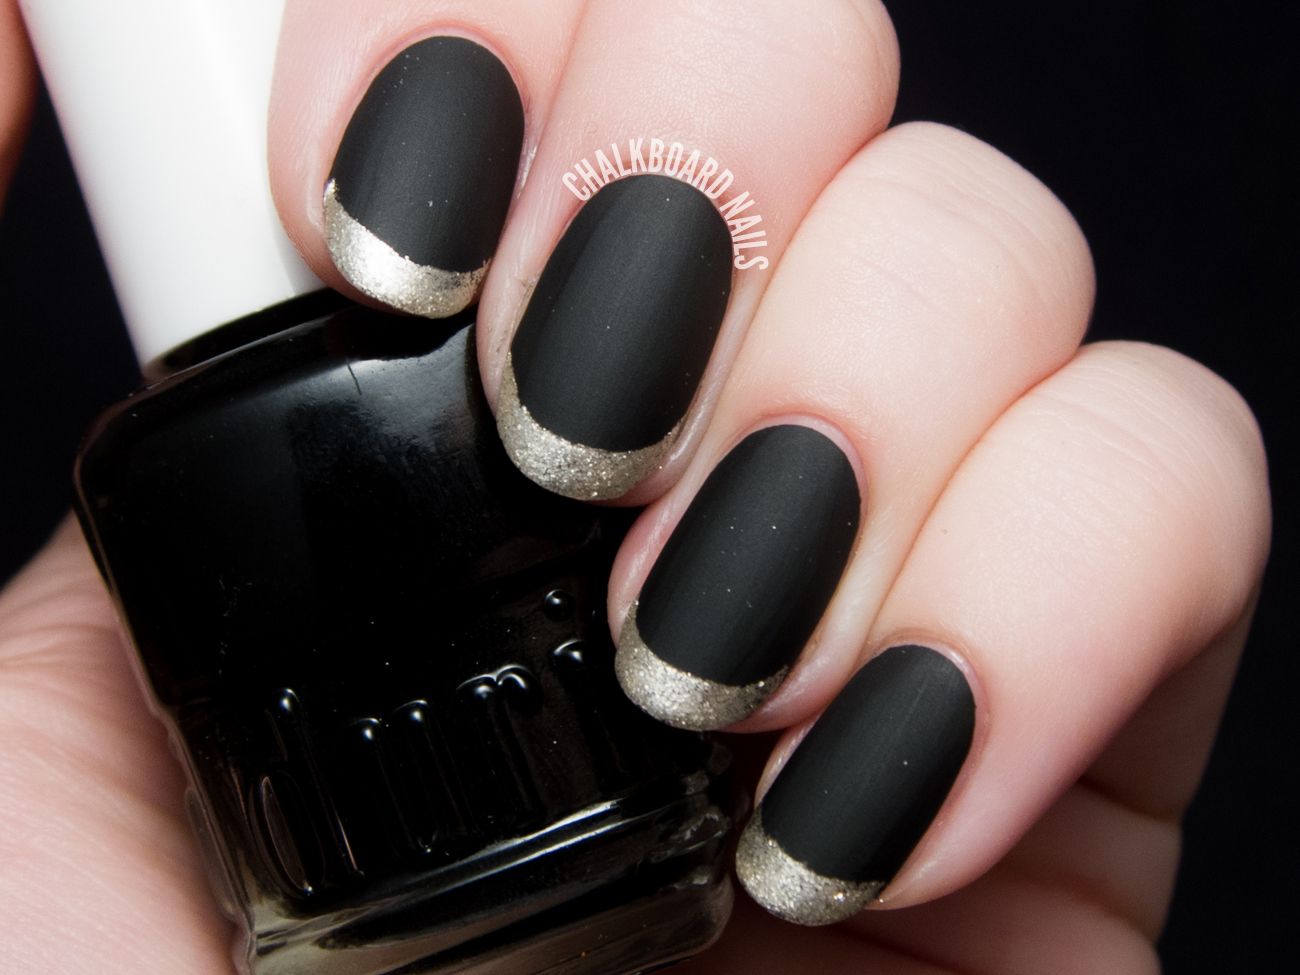 Kingston Nails - Short nails 💅 Matte black + white sugar... | Facebook